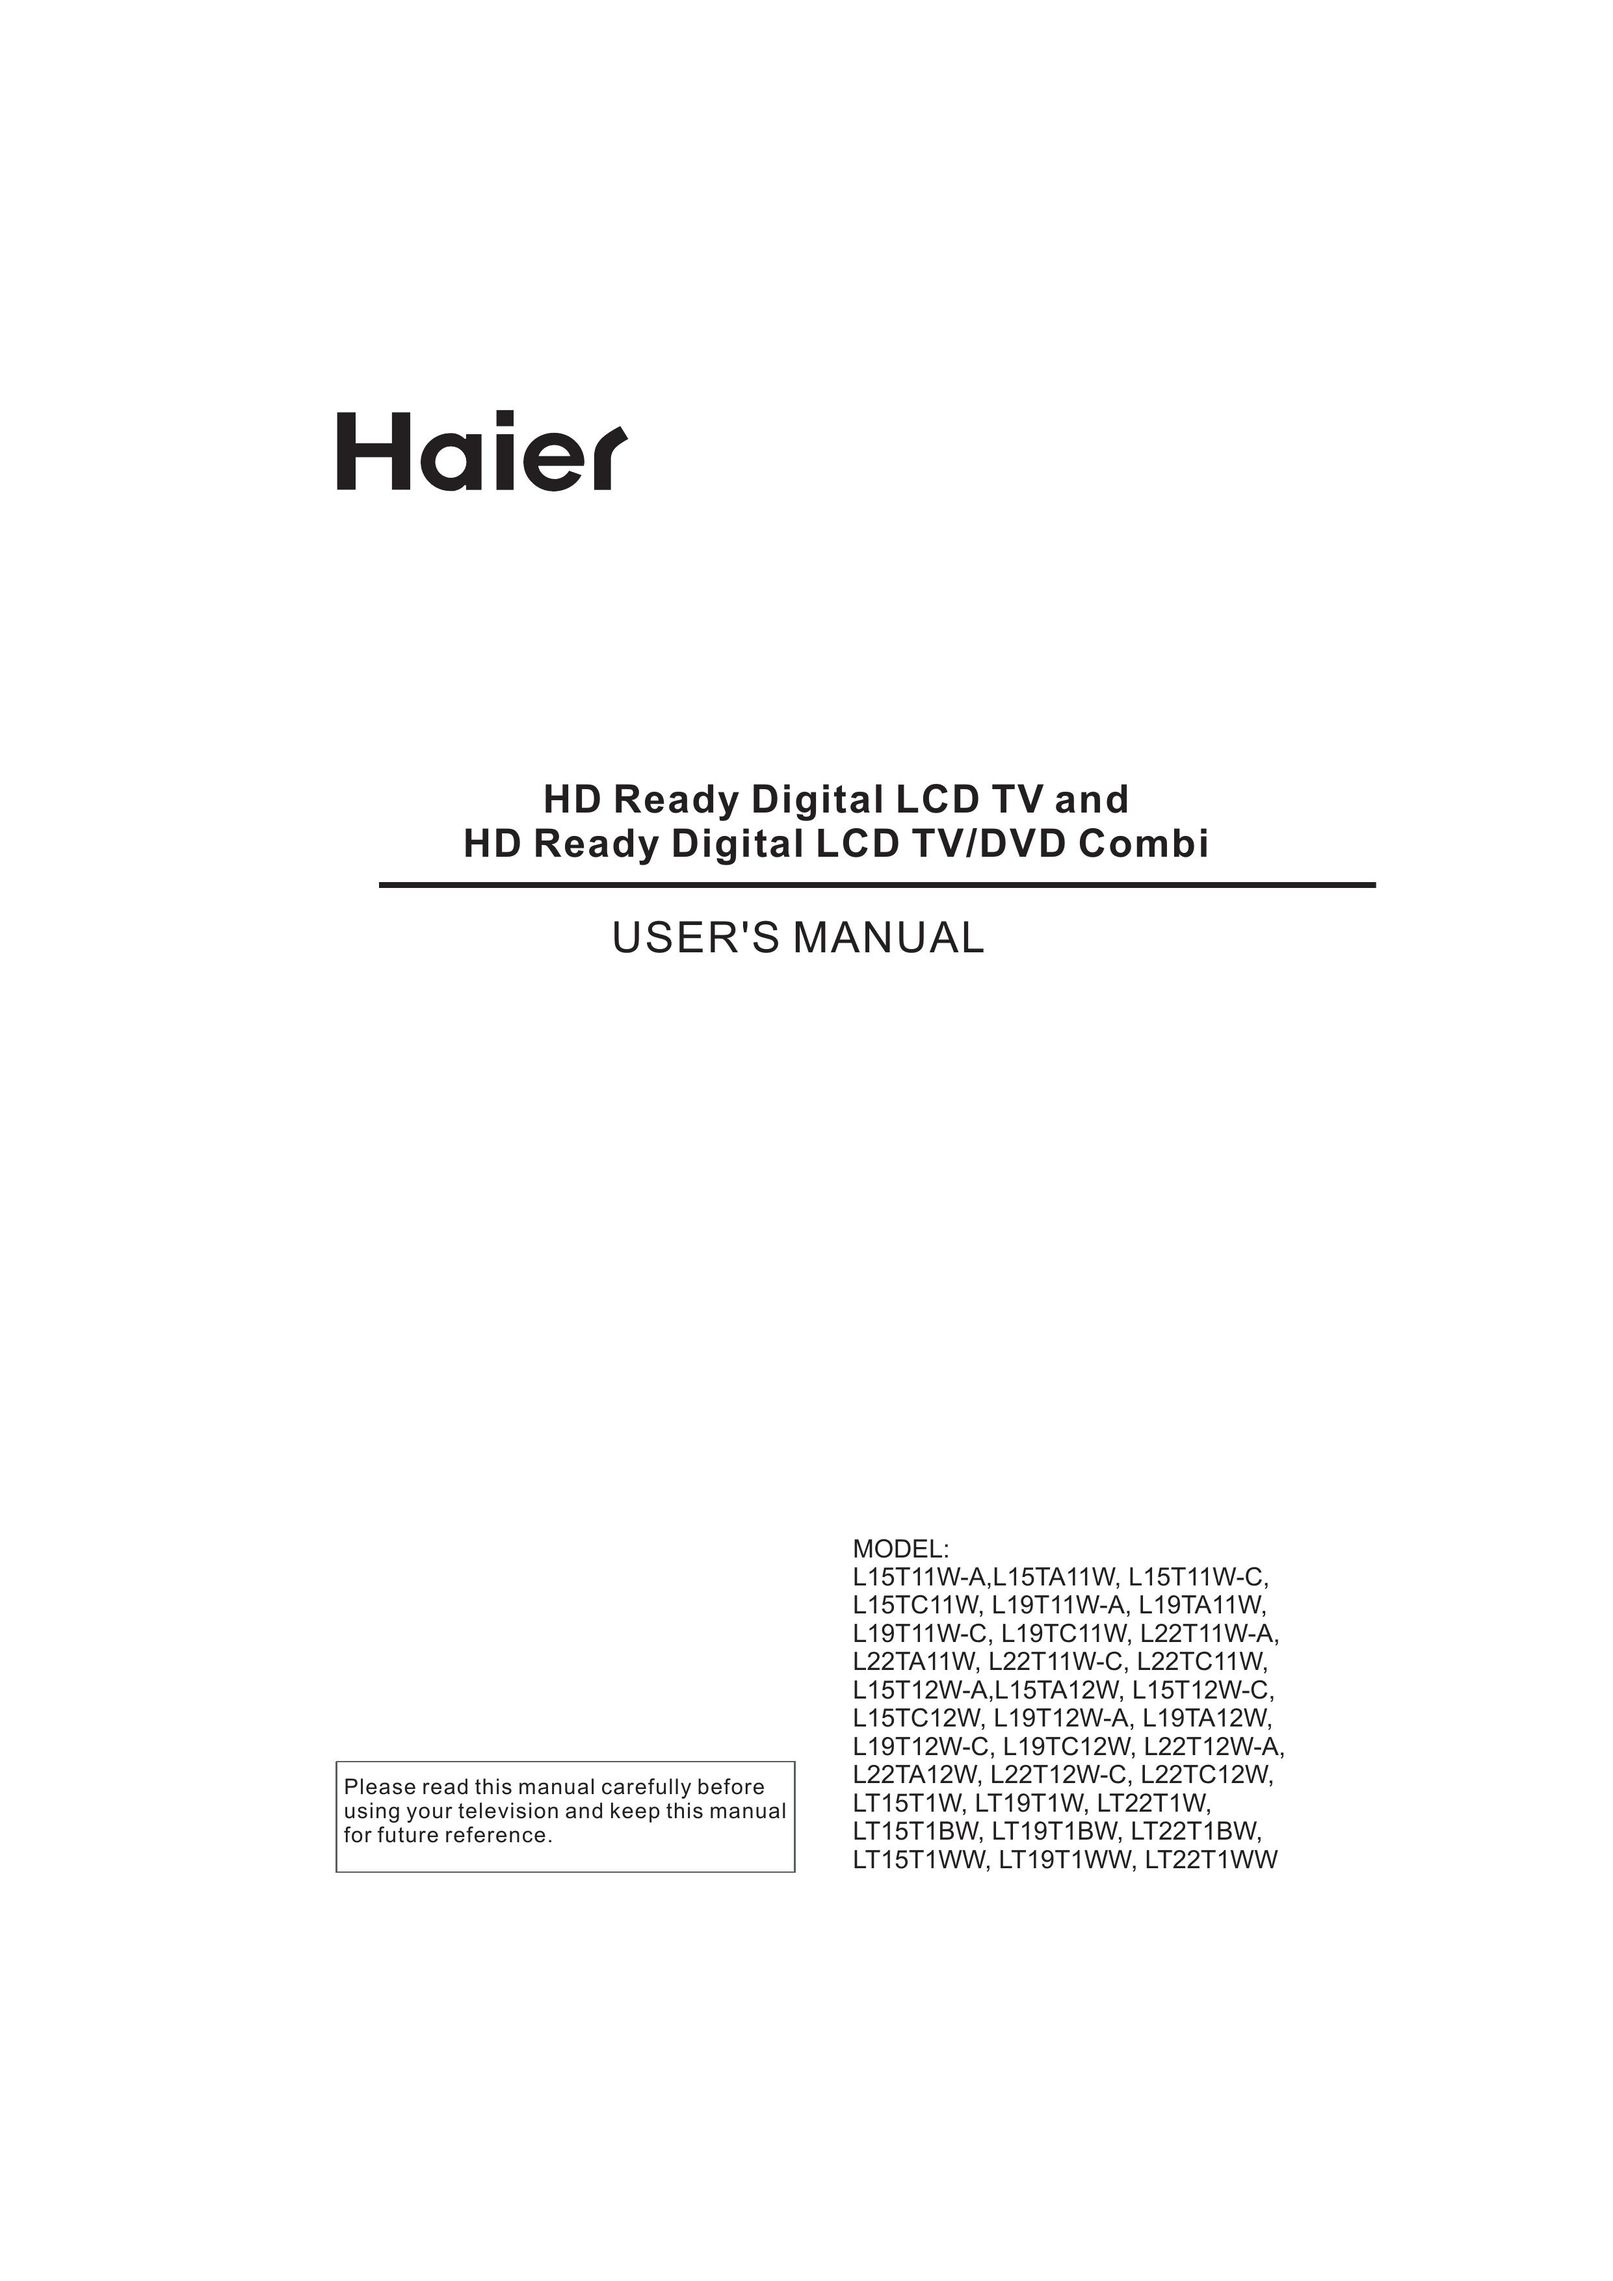 Haier L15T11W-C TV DVD Combo User Manual